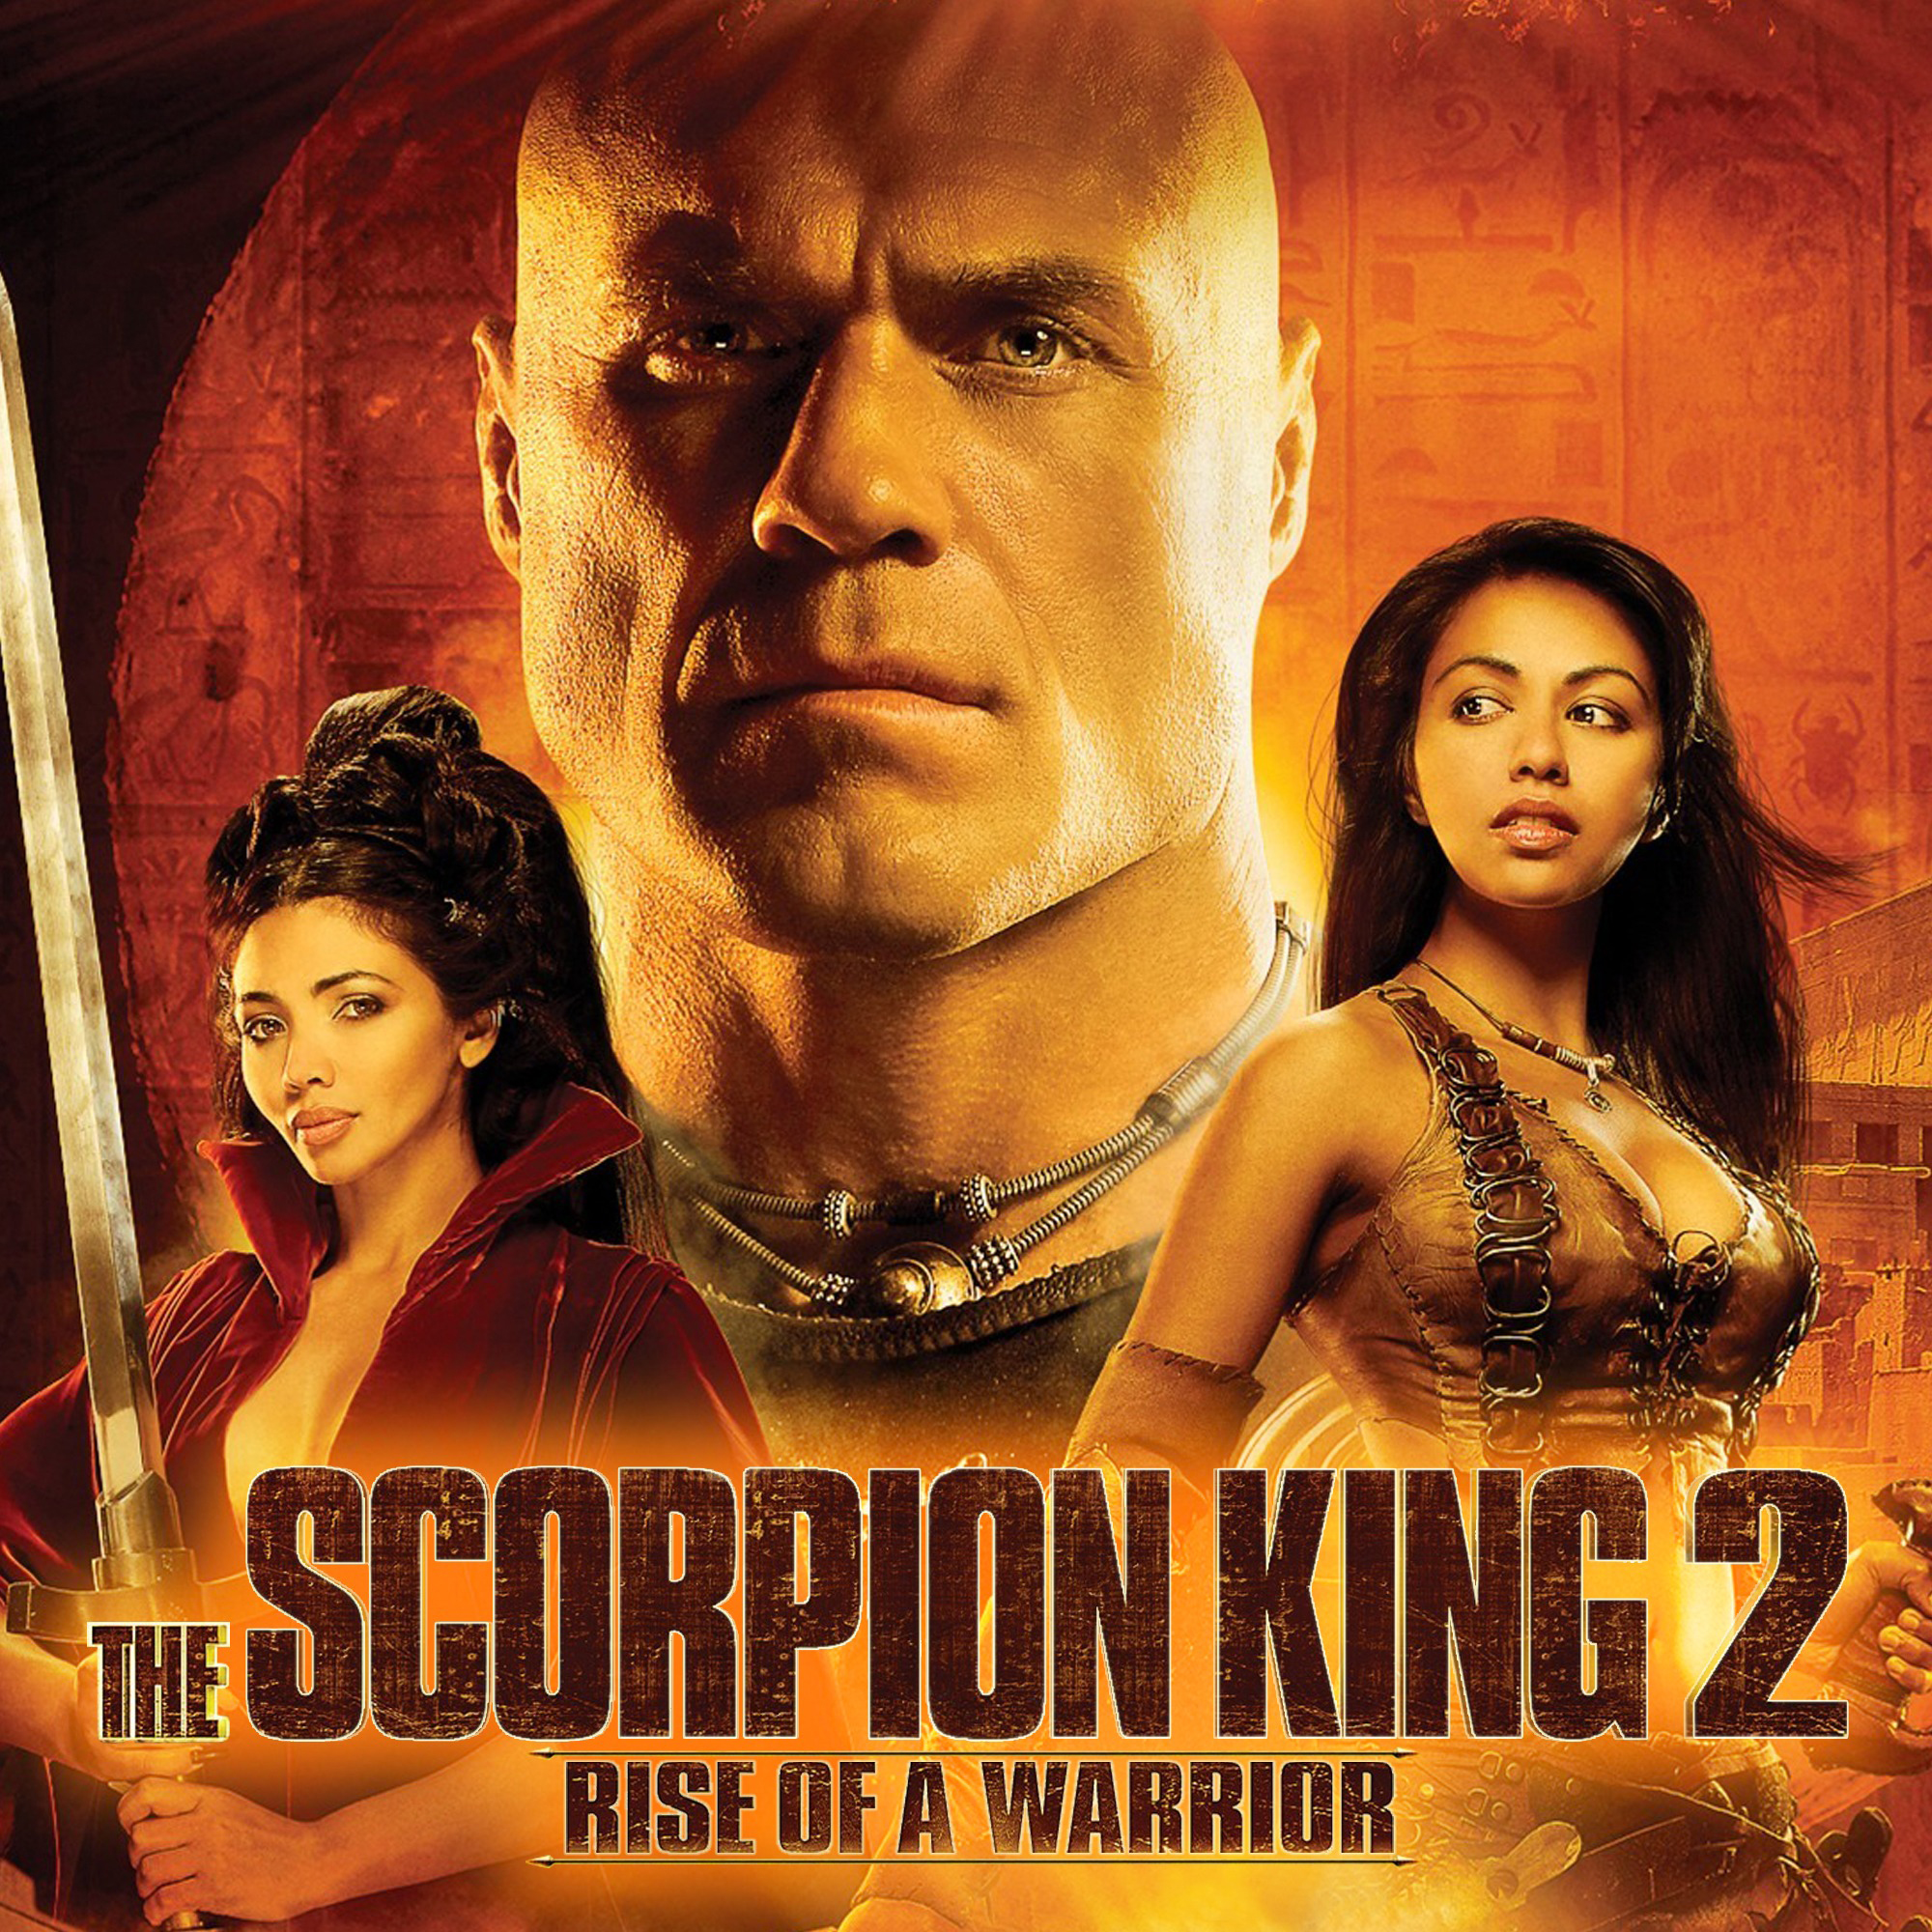 anna iannuzzi recommends Scorpion King Full Movie Free